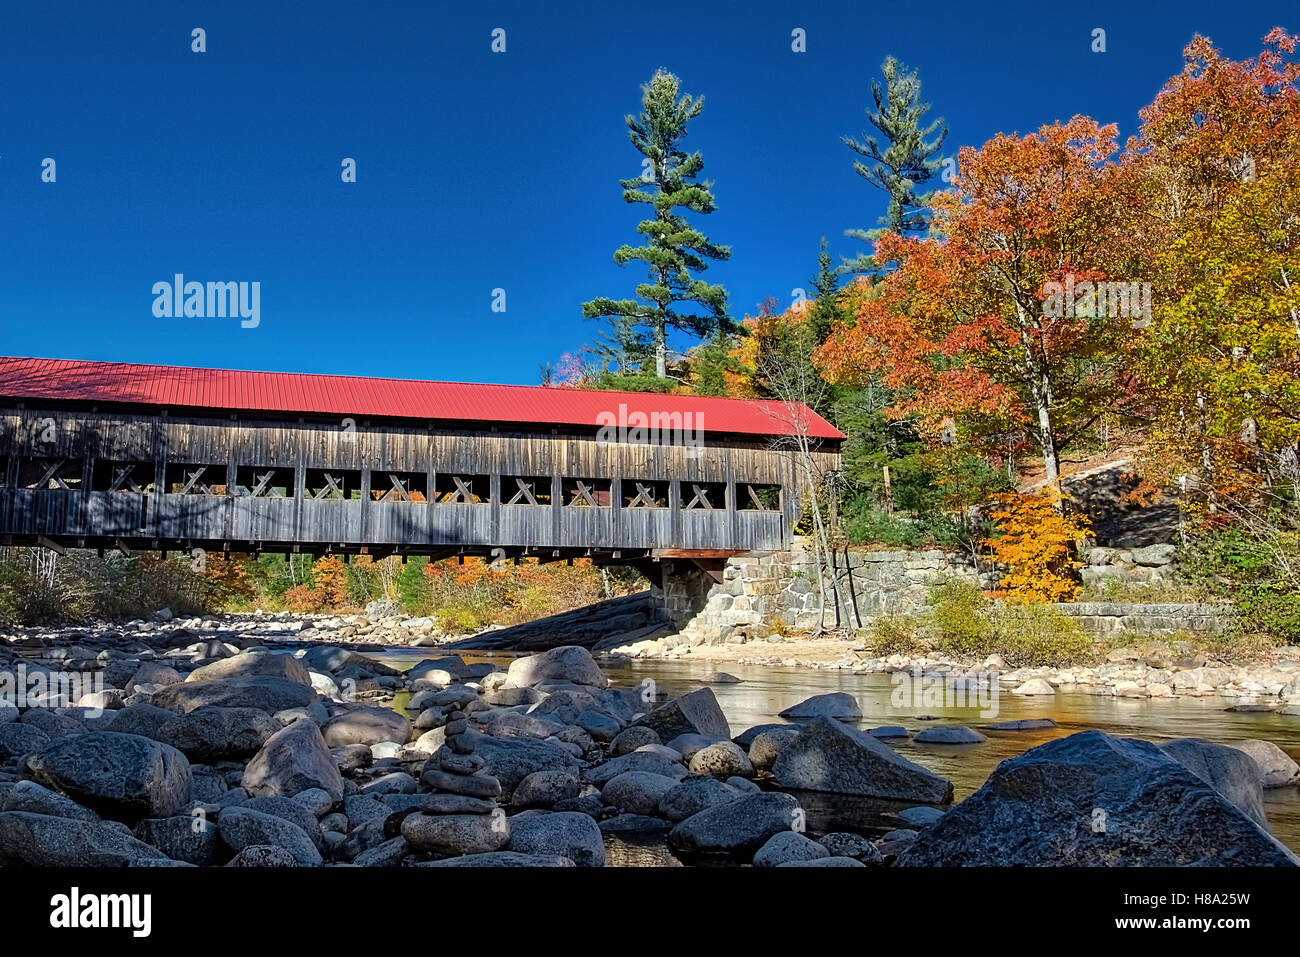 Albany Covered Bridge spanning the Swift River, Albany, New Hampshire, USA. Stock Photo